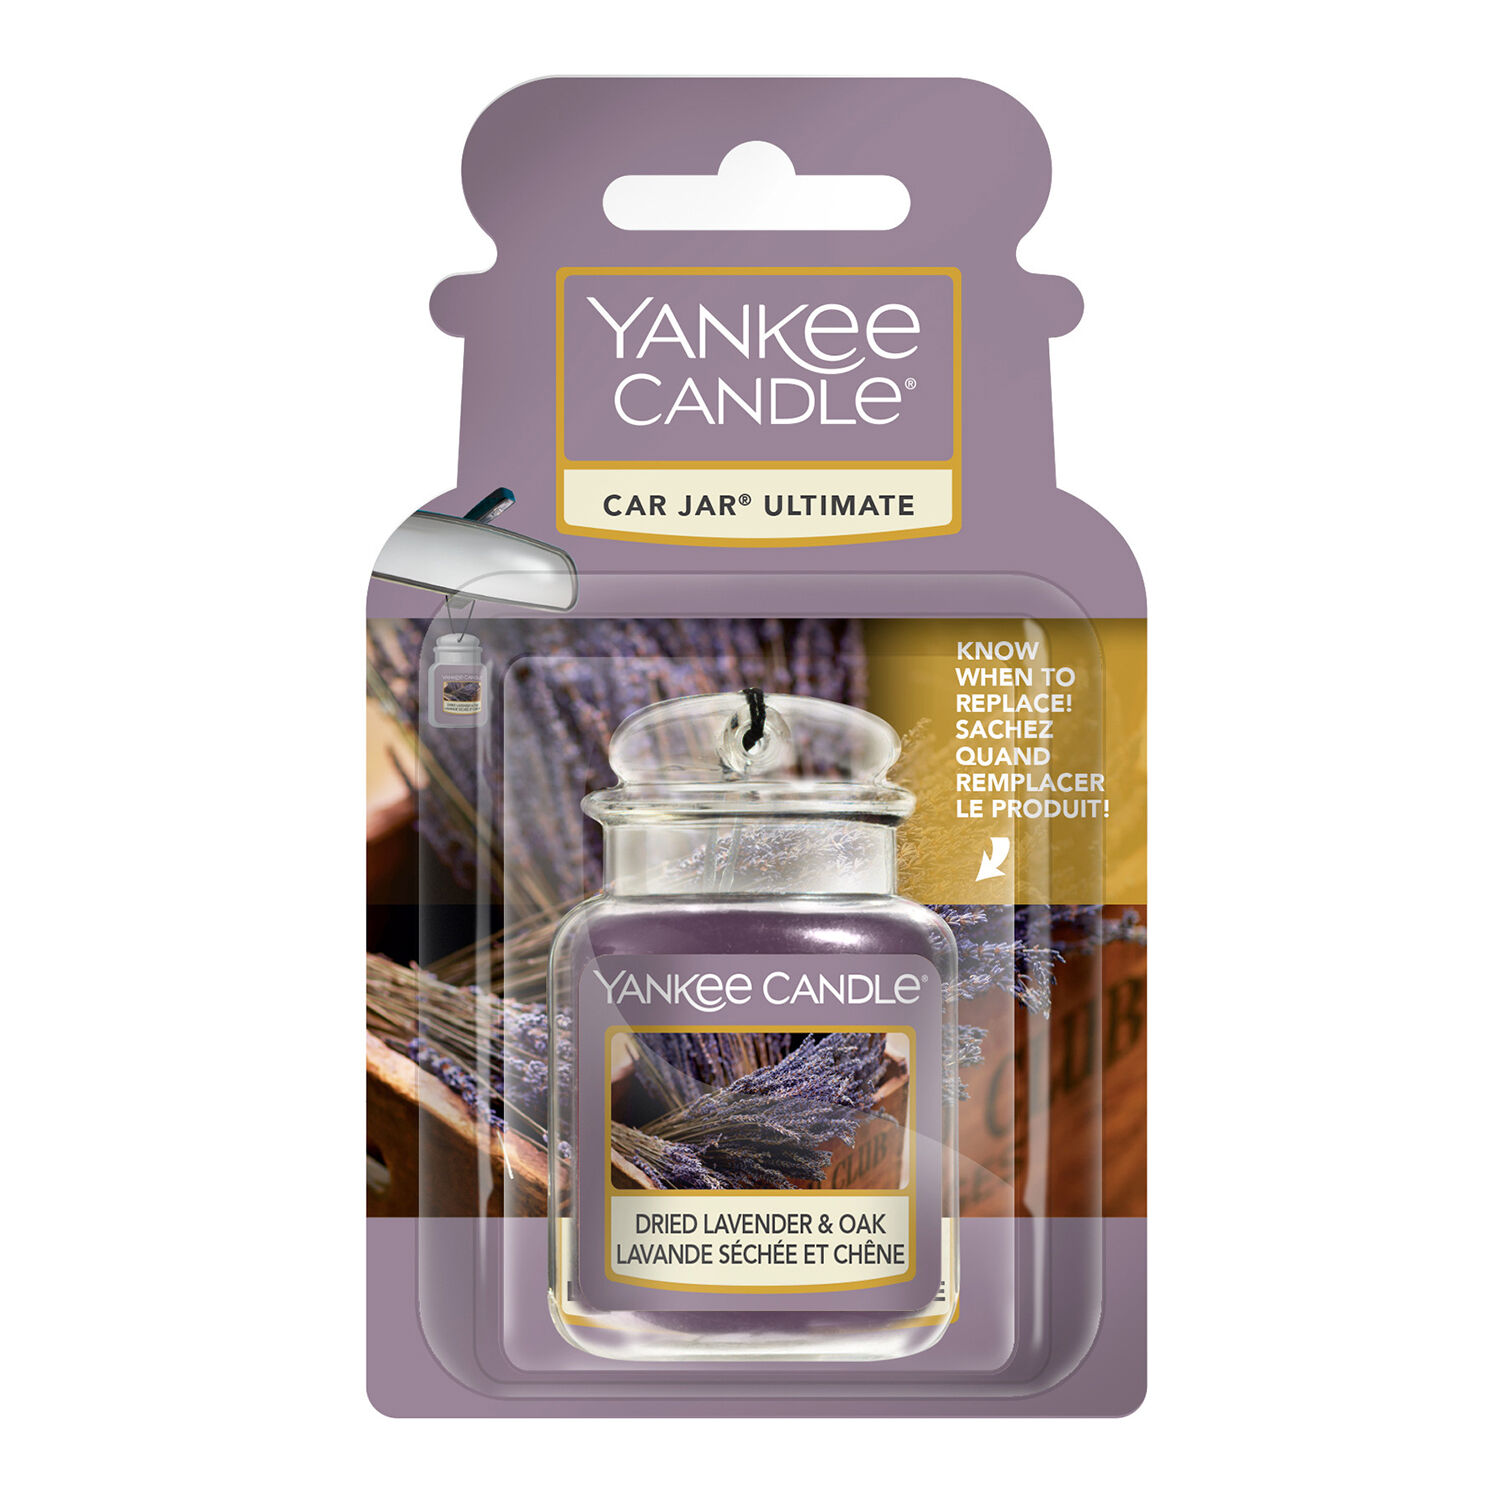 Yankee Candle Dried Lavender & Oak Car Jar Ultimate Autoduft